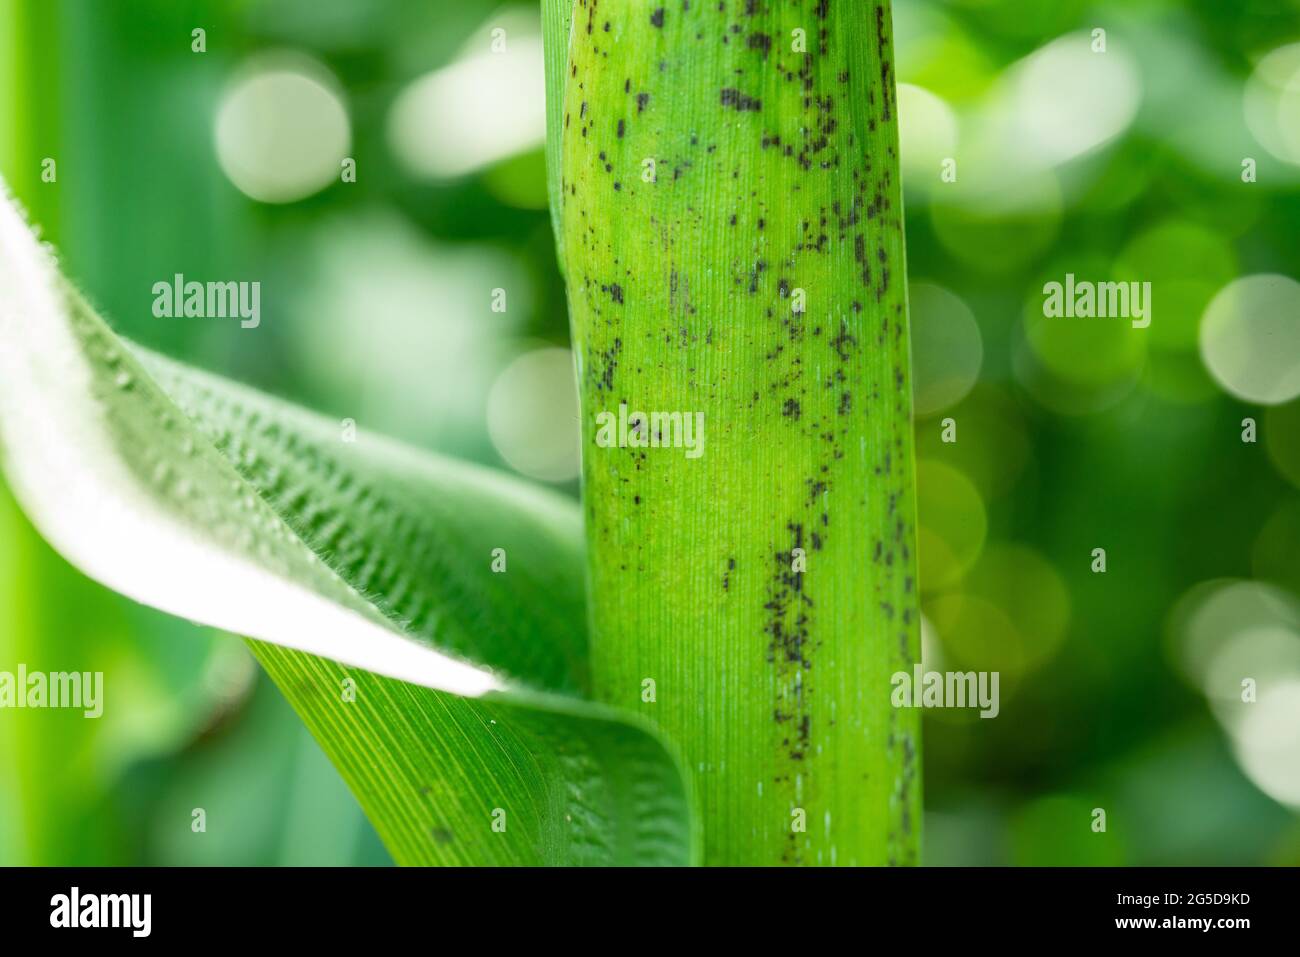 Fungus on corn stalks Stock Photo